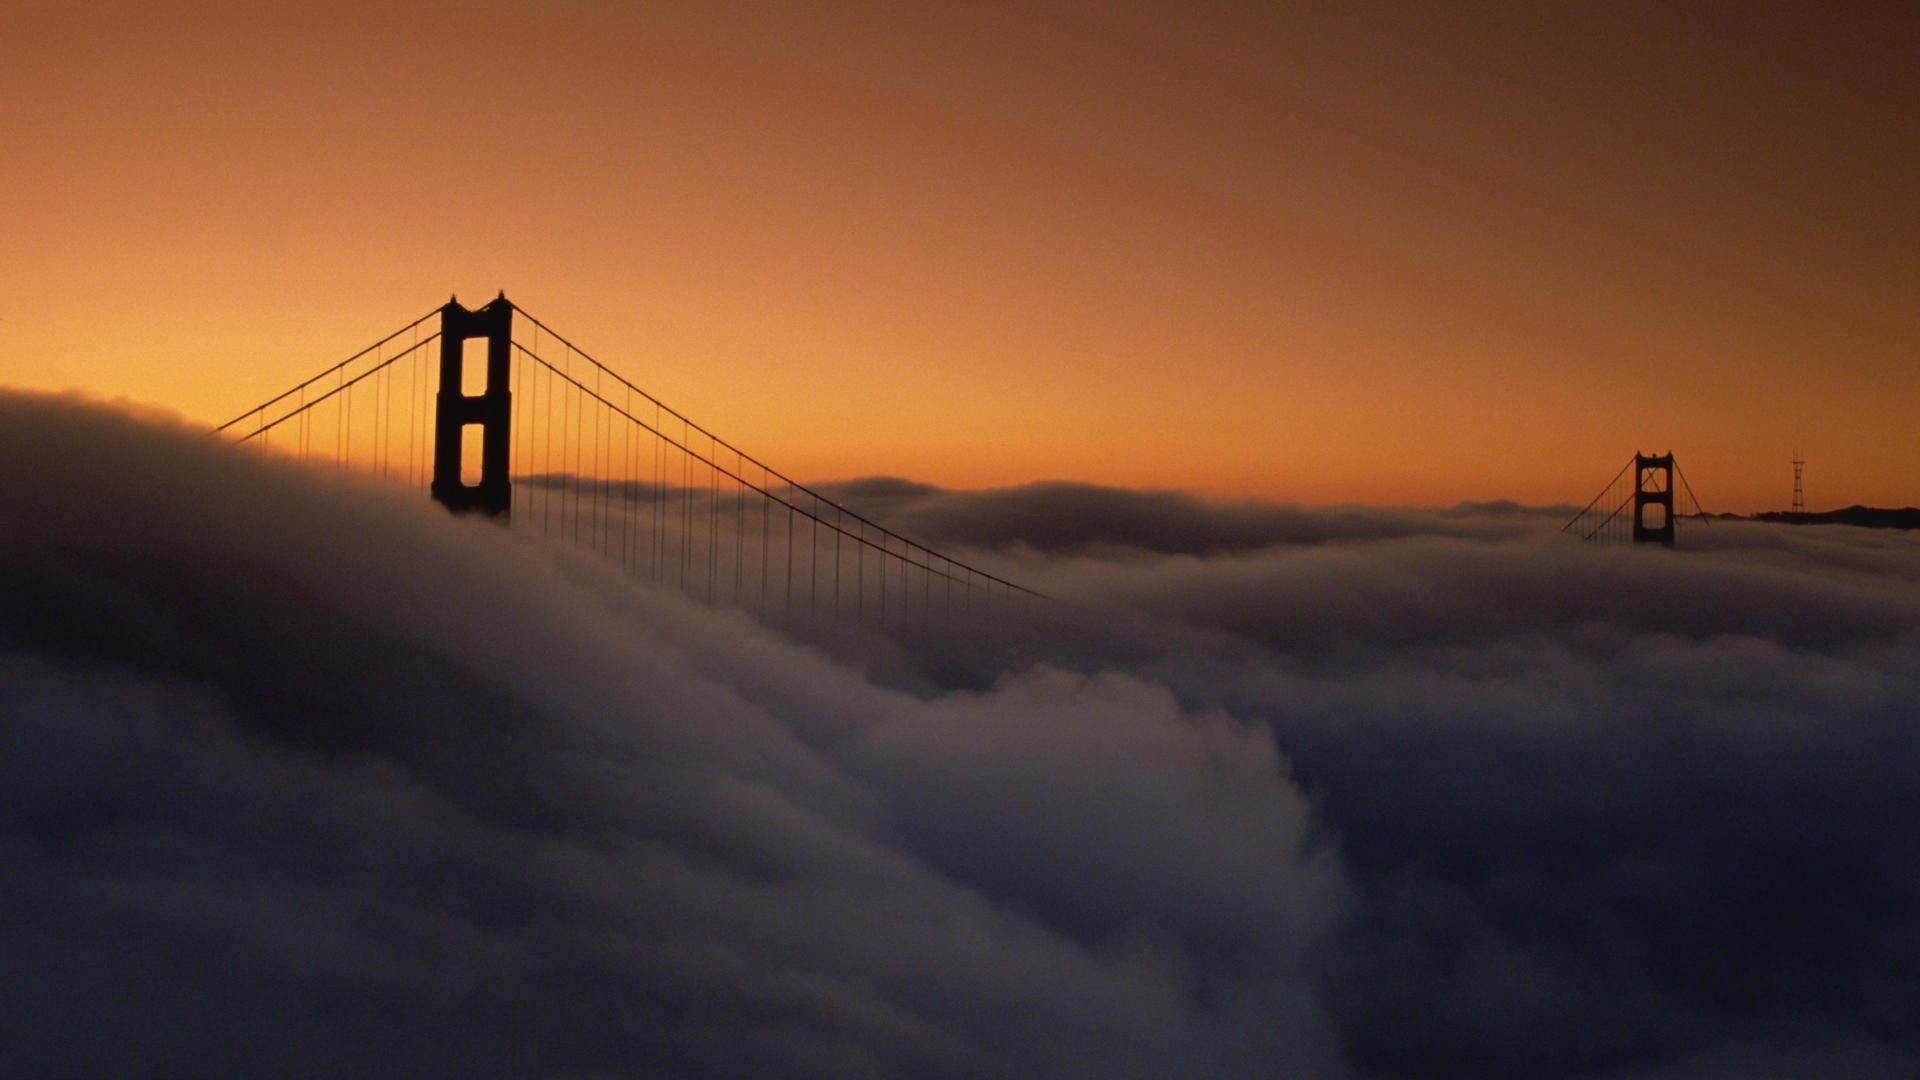 Clouds Golden Gate Bridge California San Francisco US Marines Corps wallpaper 346349 WallpaperUP